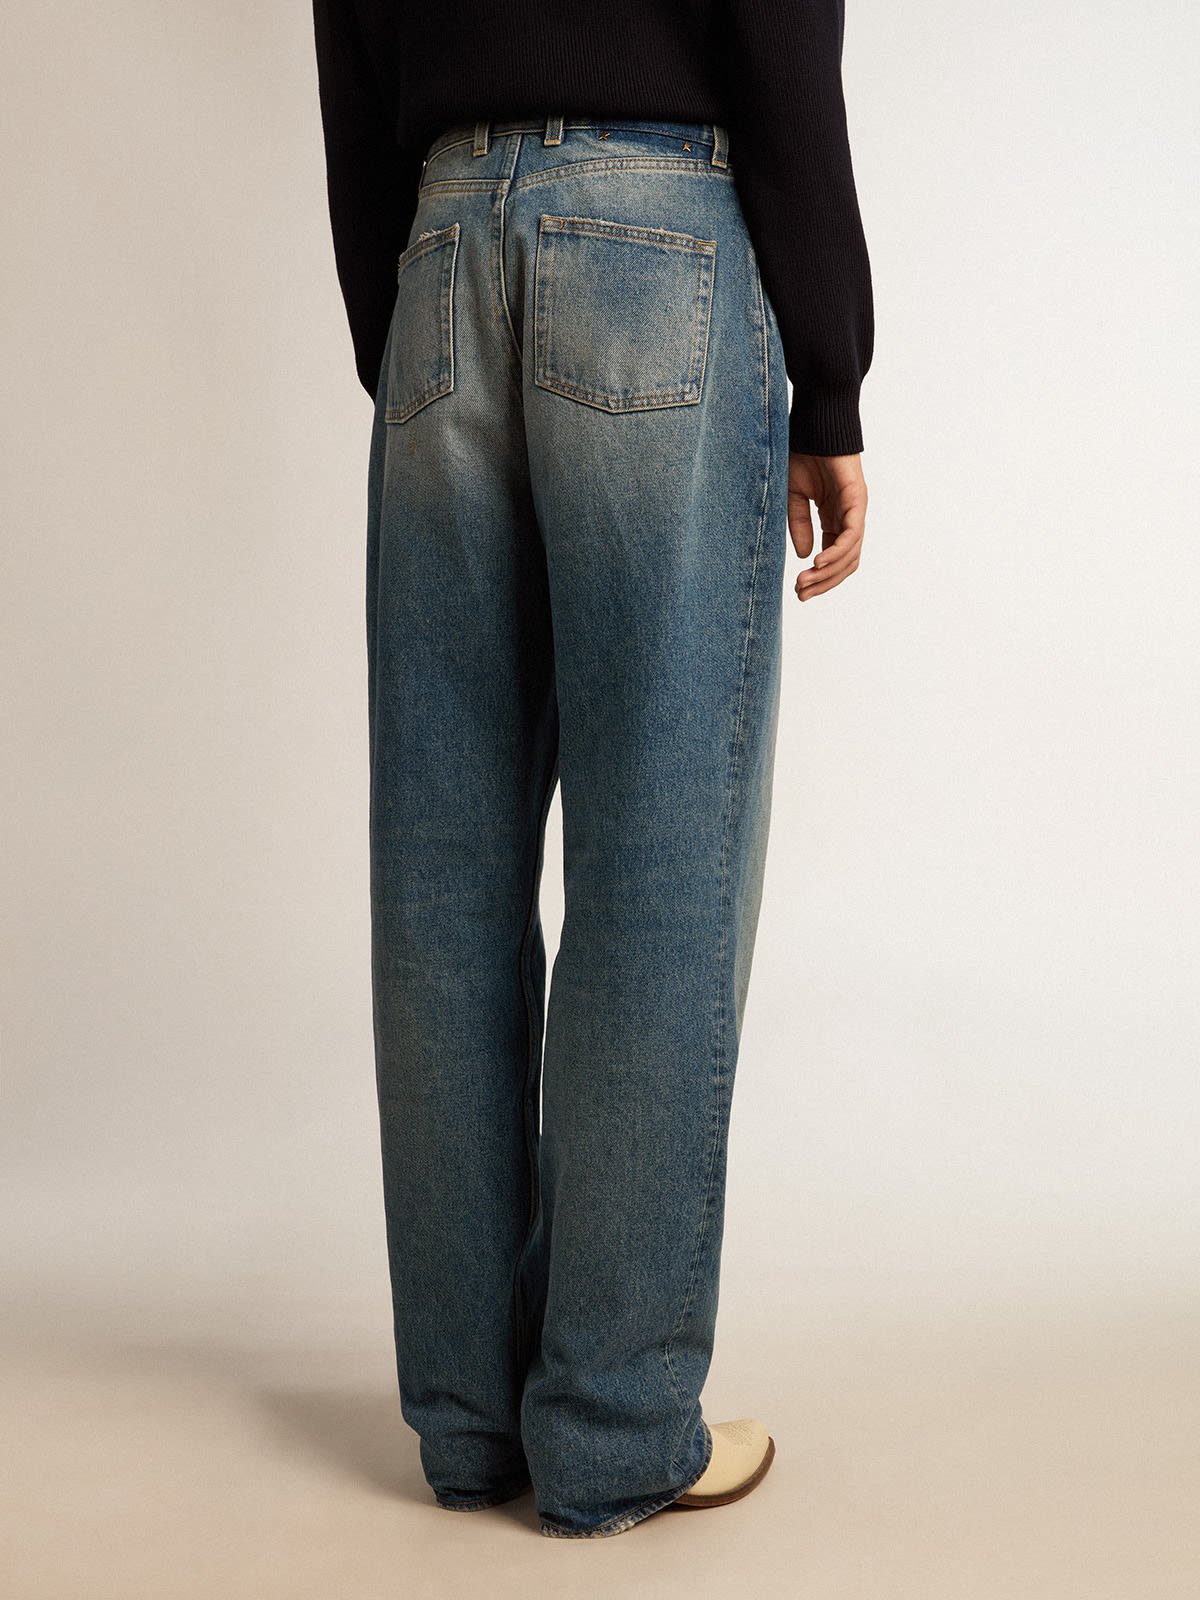 Women's jeans with medium wash | Golden Goose